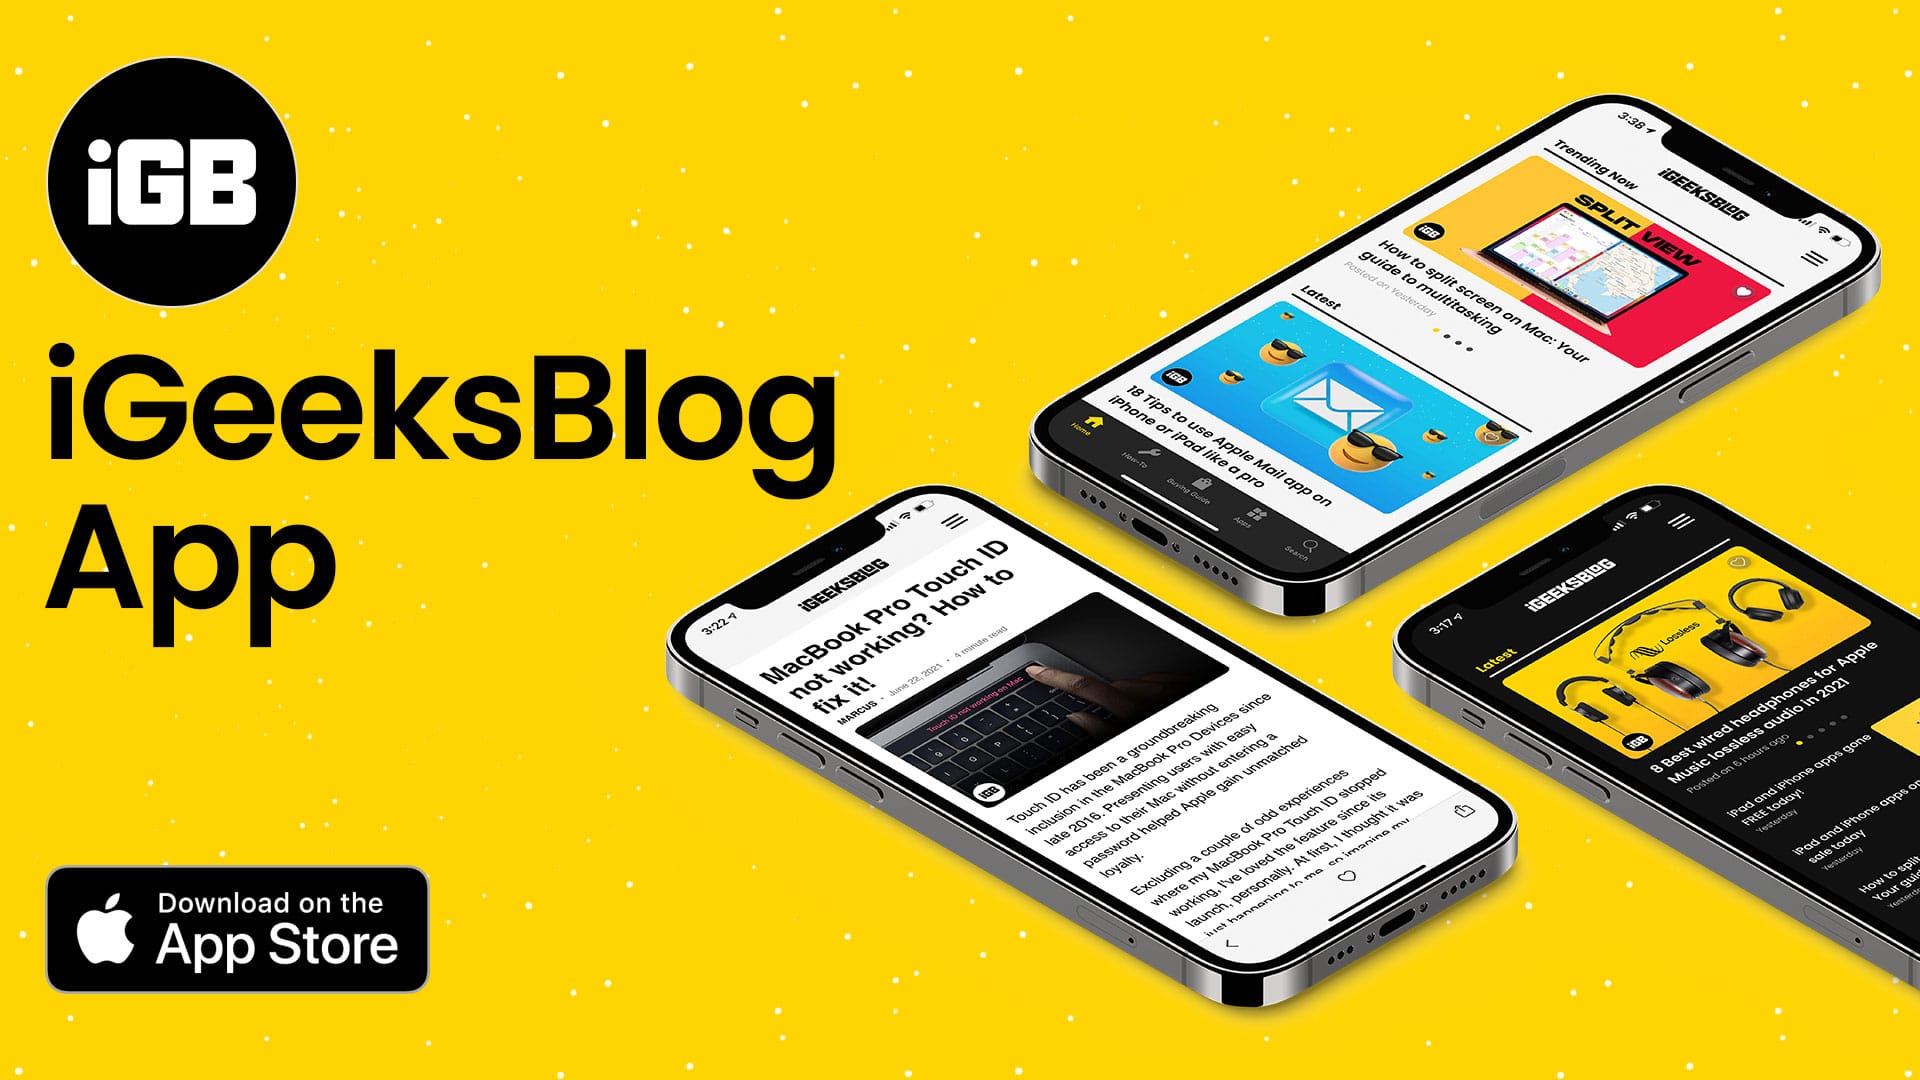 Igeeksblog app for iphone and ipad